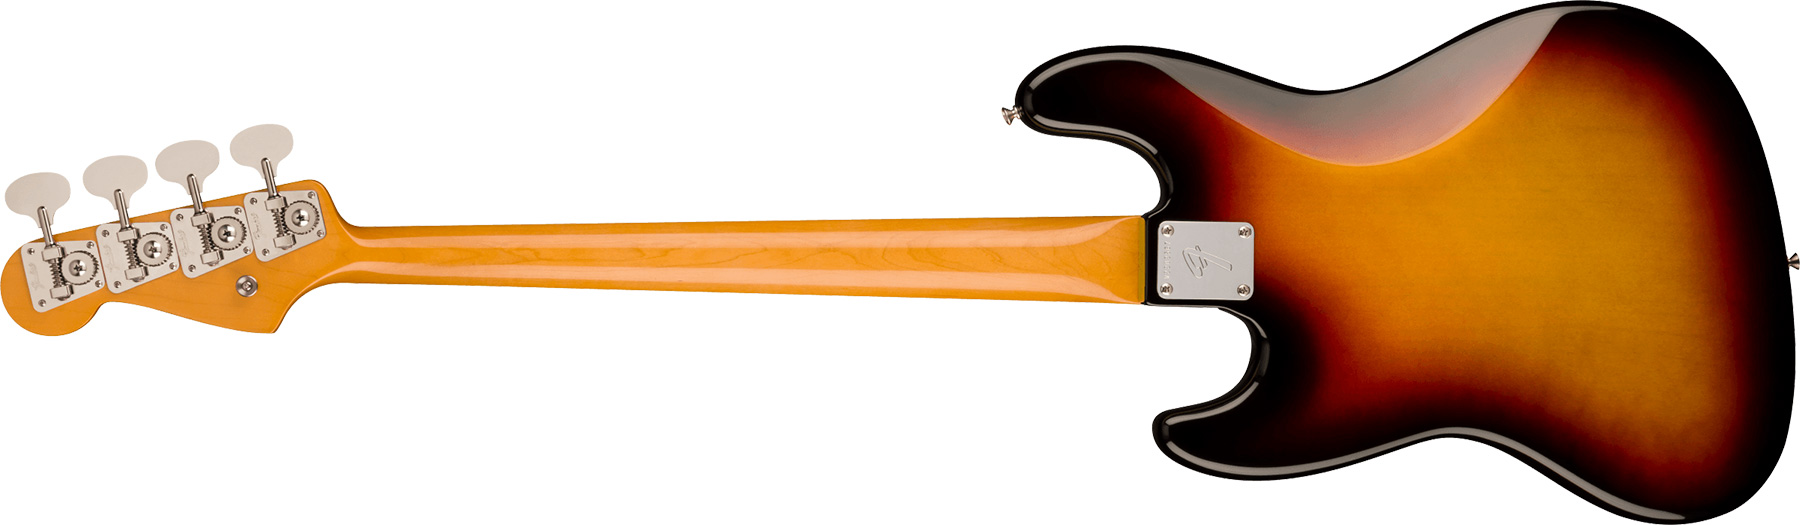 Fender Jazz Bass 1966 American Vintage Ii Usa Rw - 3-color Sunburst - Solid body electric bass - Variation 1